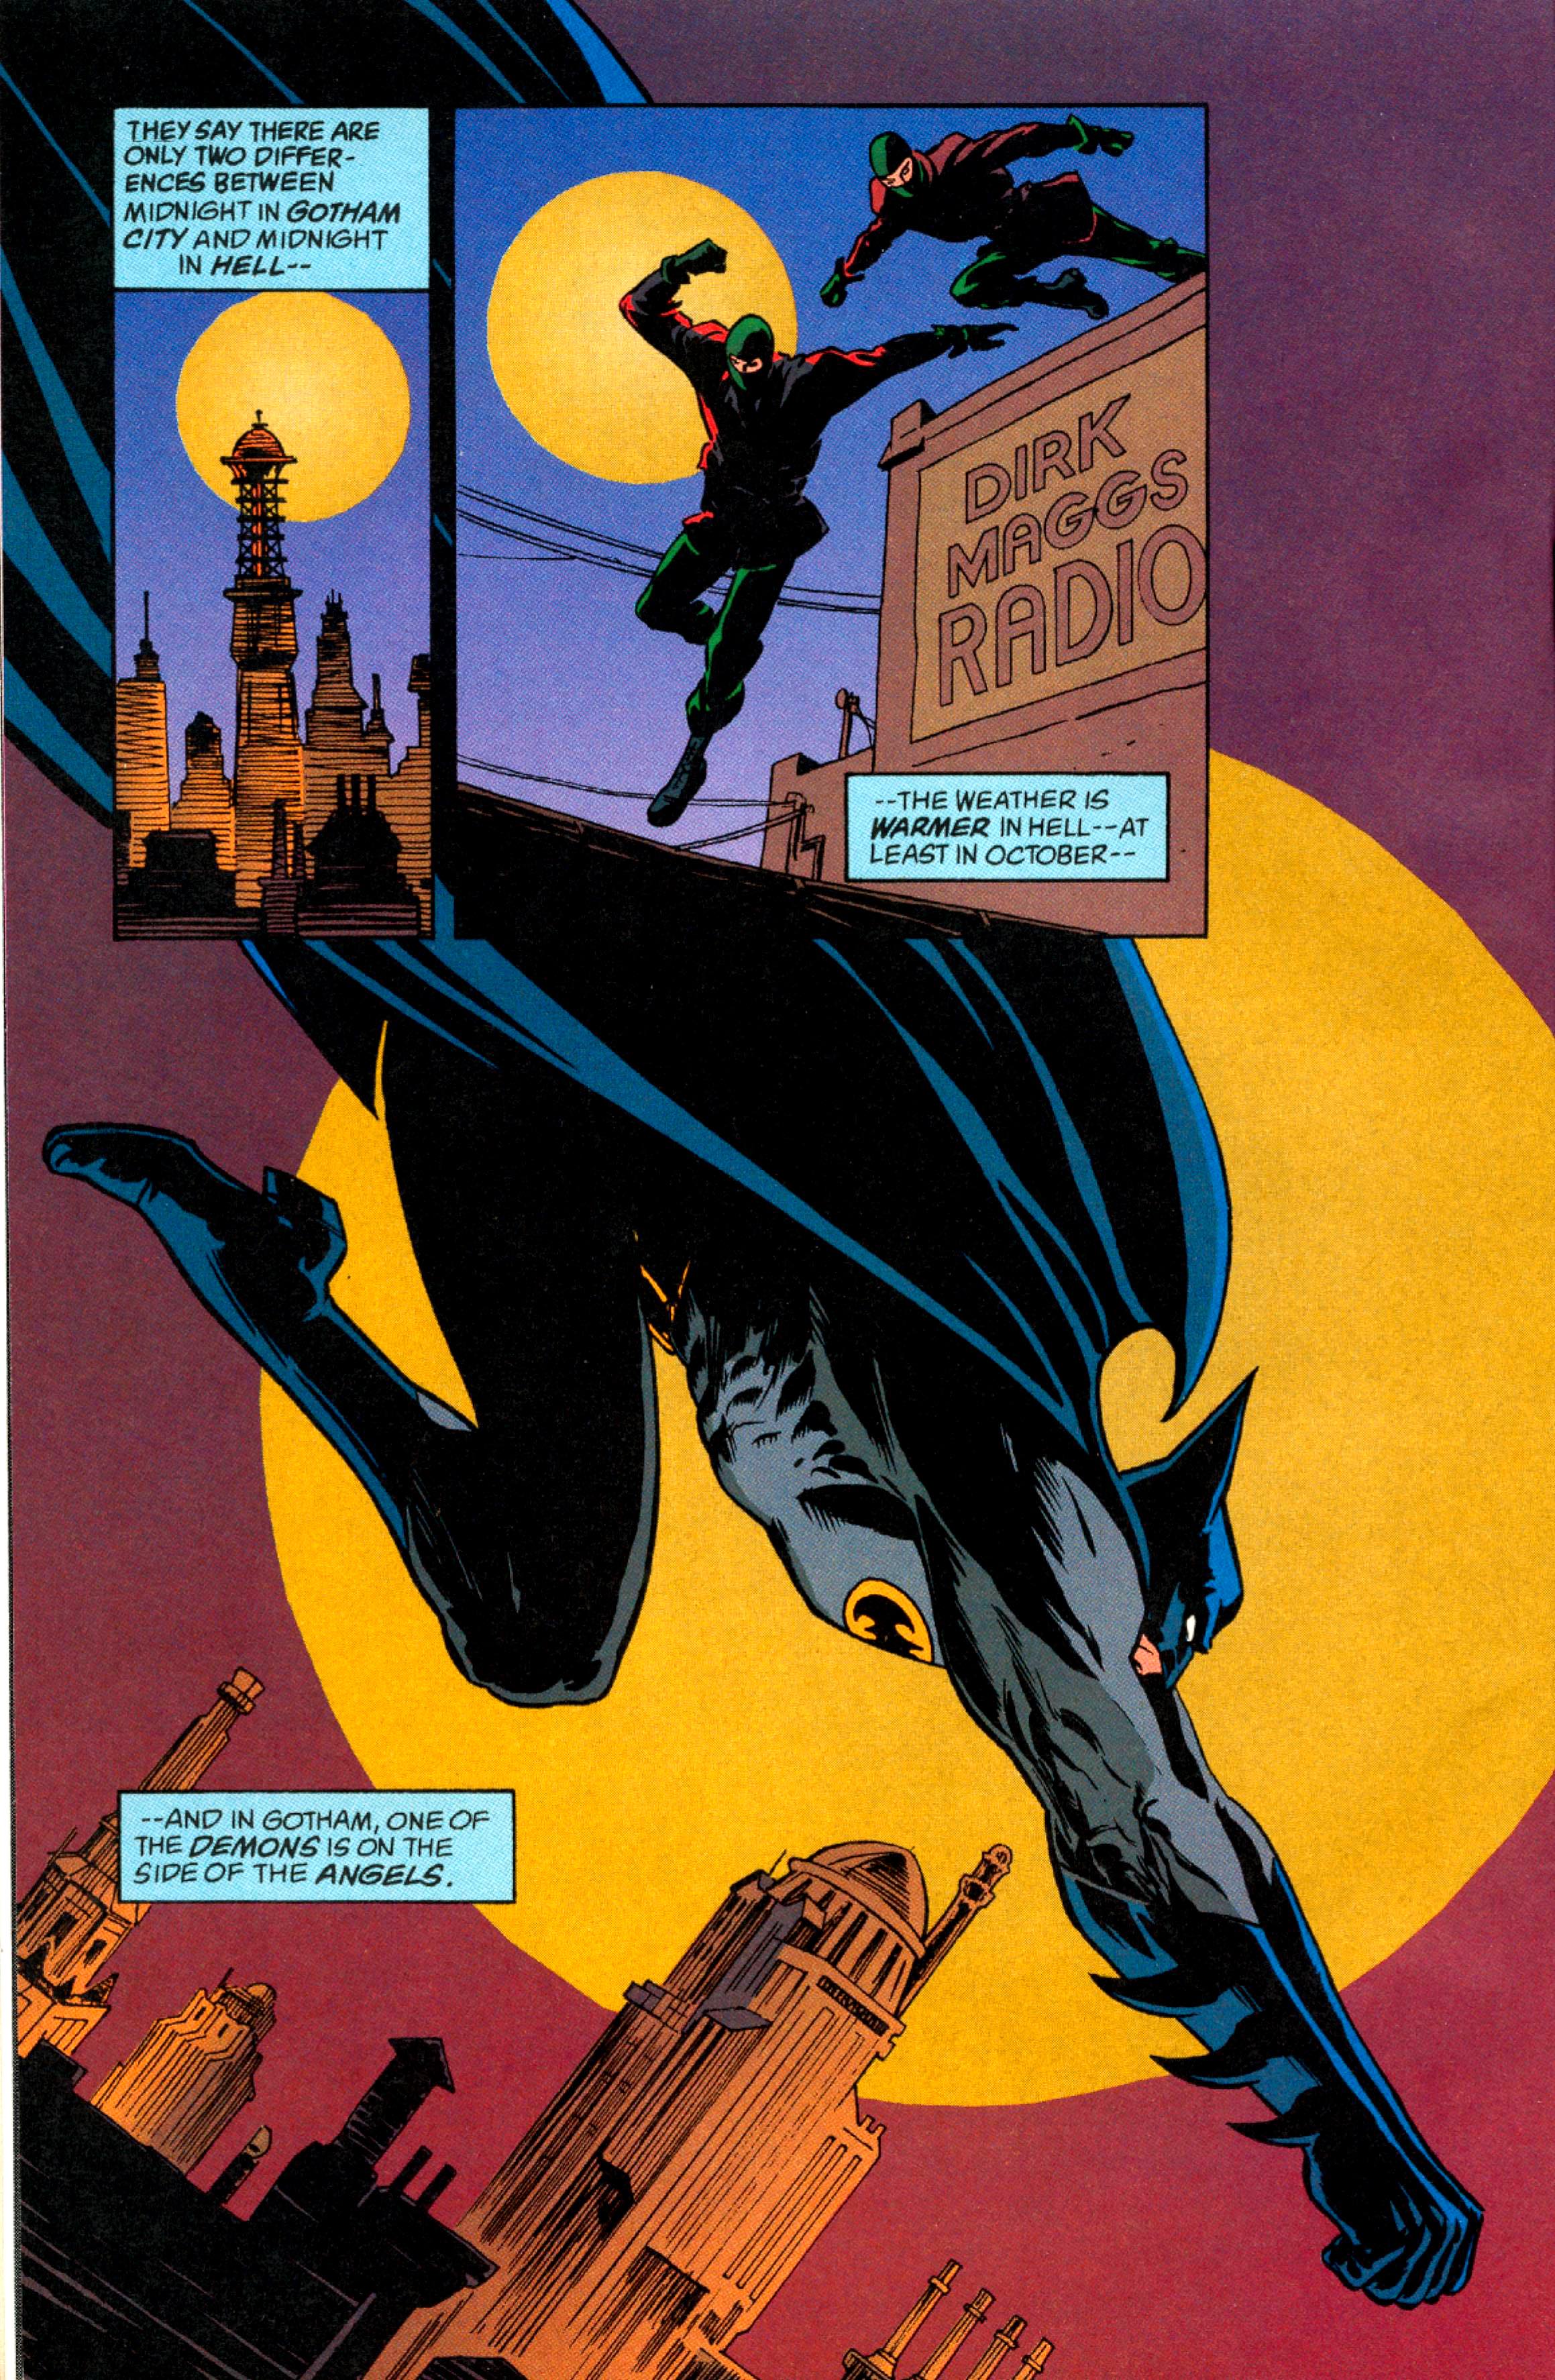 BATMAN - DIRK'S PAGE